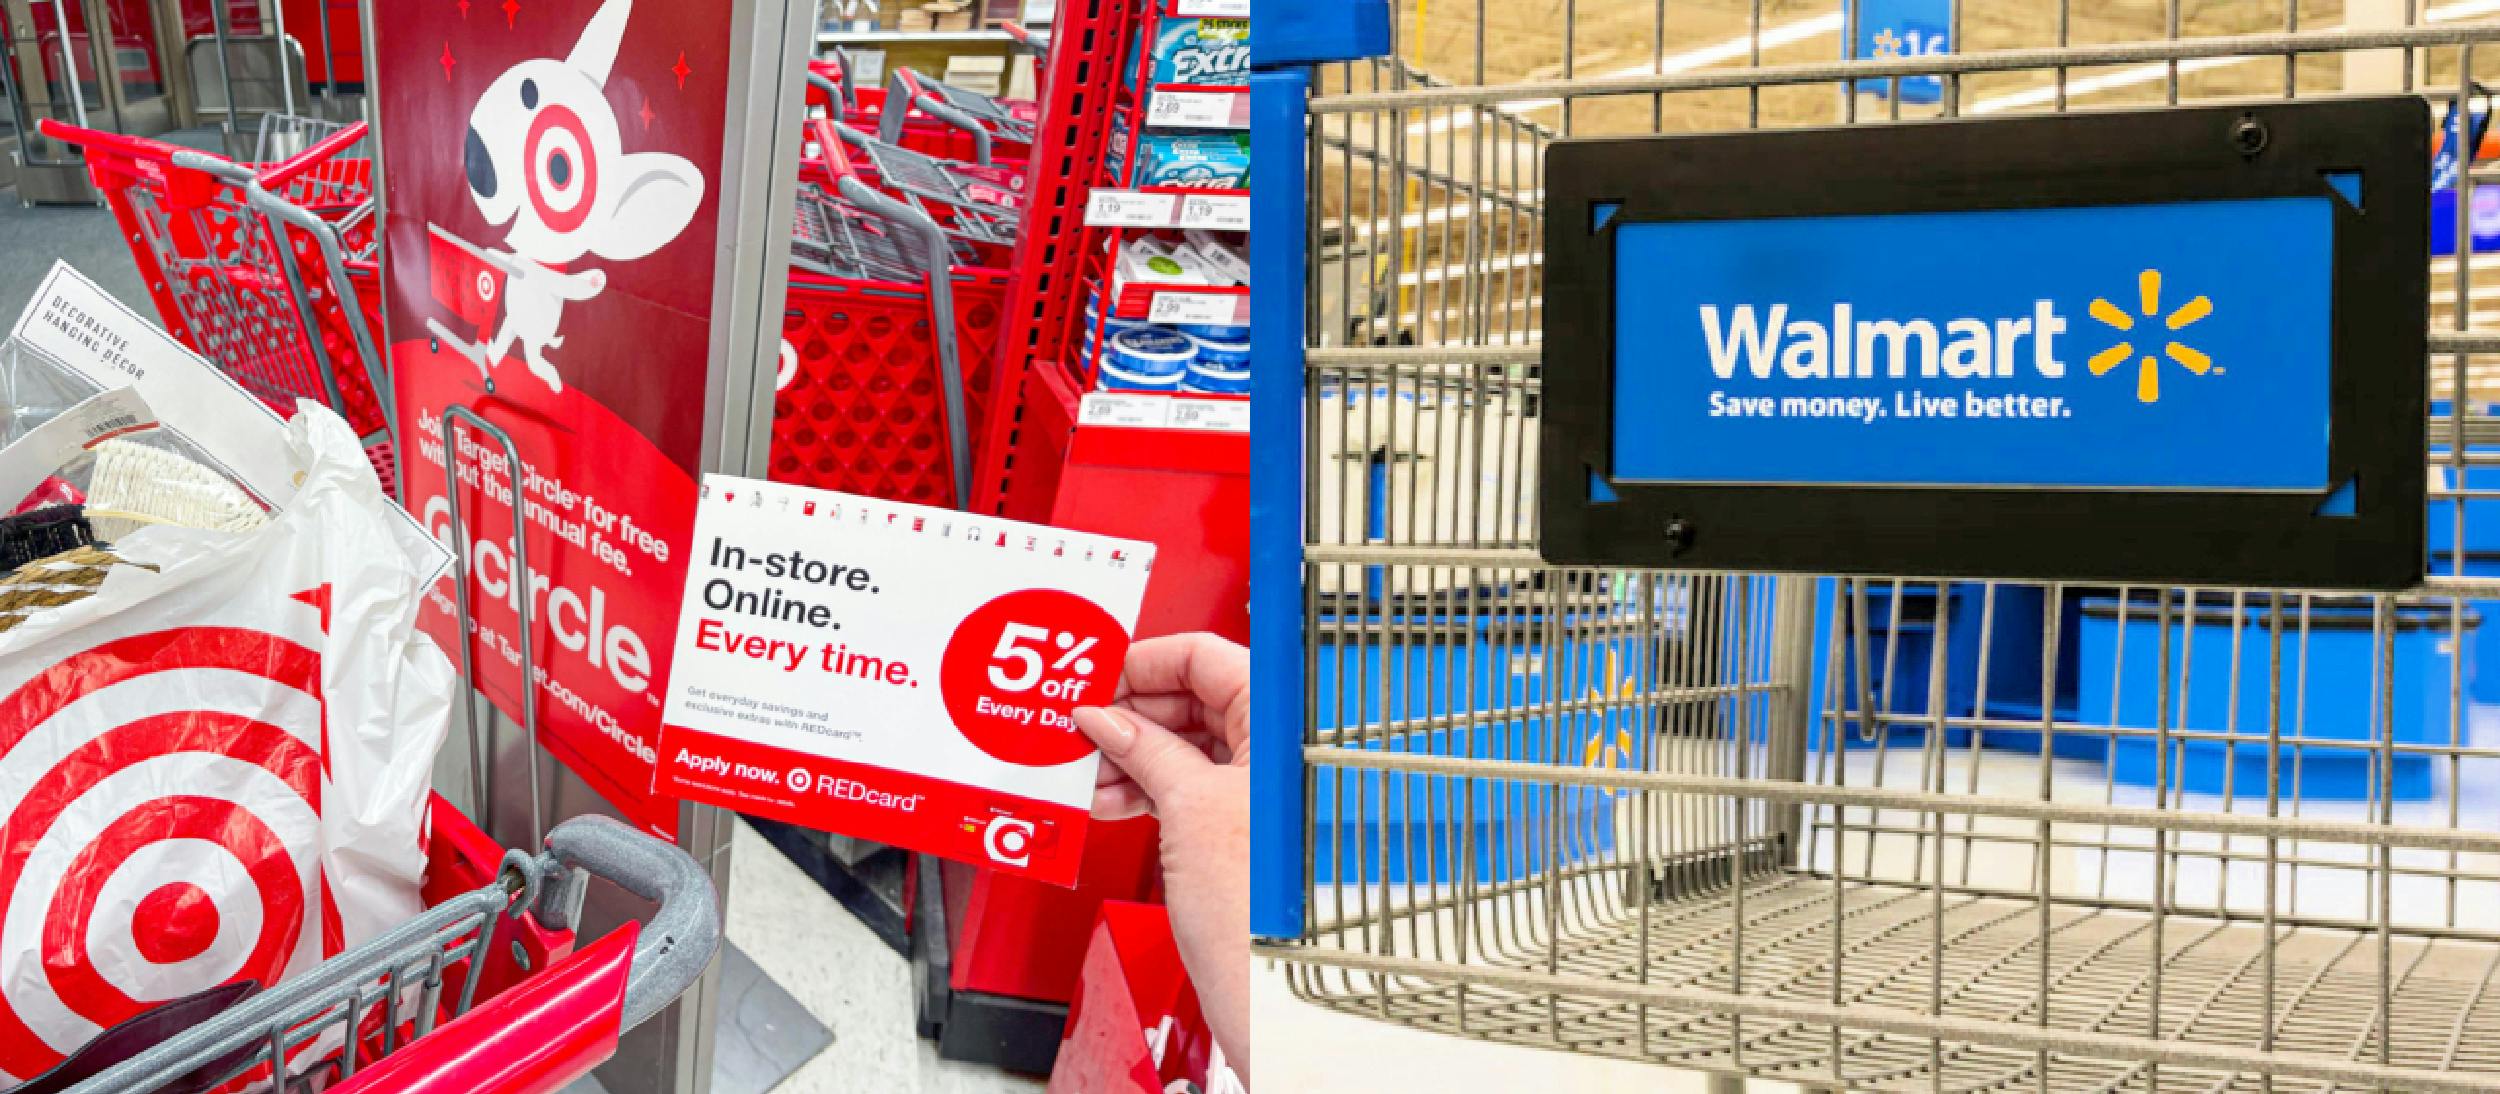 Target vs. Walmart: Where Should You Shop? - The Krazy Coupon Lady